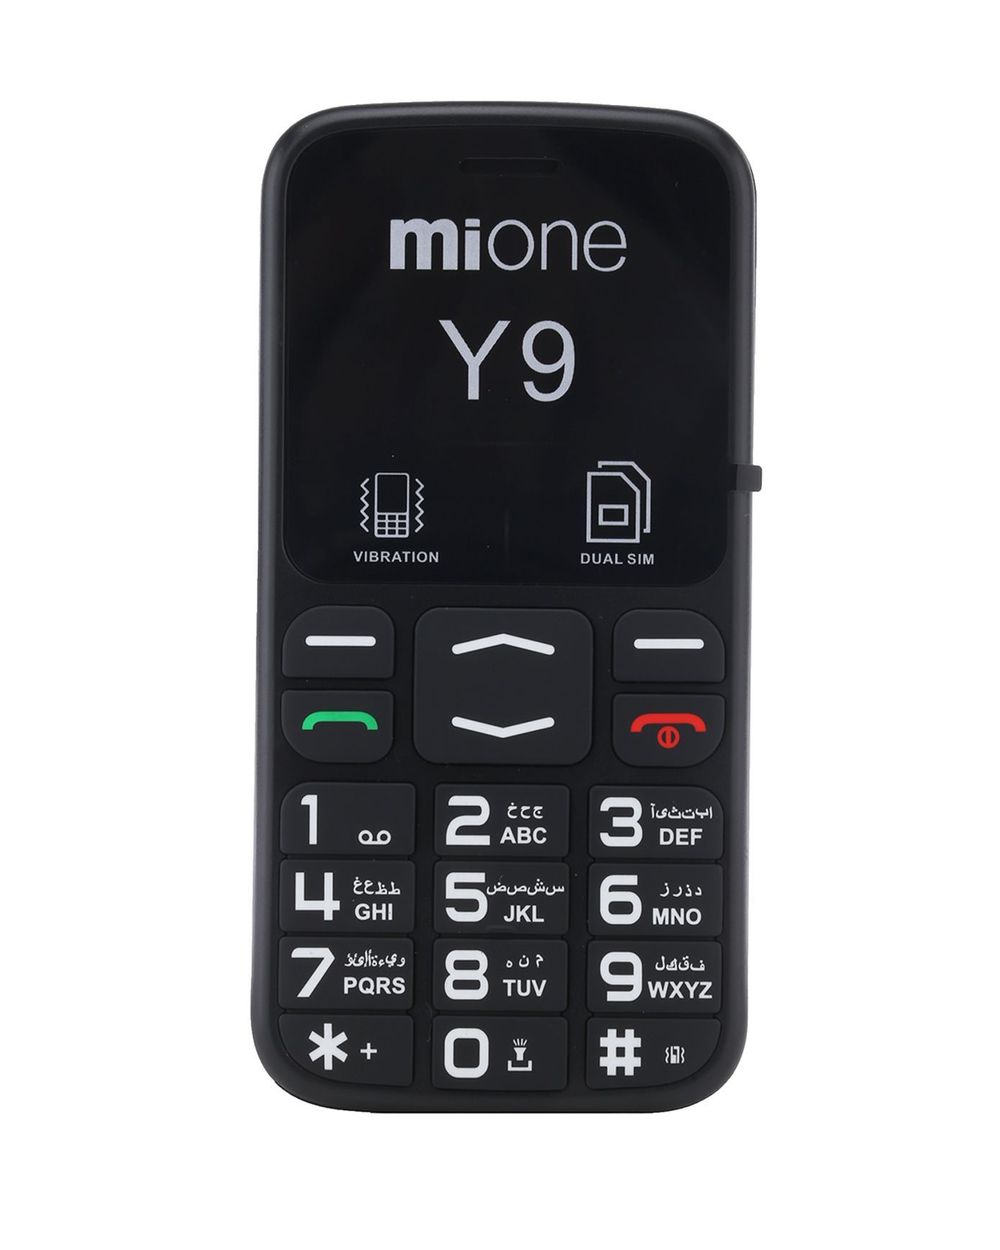 Mione Y9 Dual Sim Black Buy Mobiles Online Best Price And Offers Ksa Hnak Com